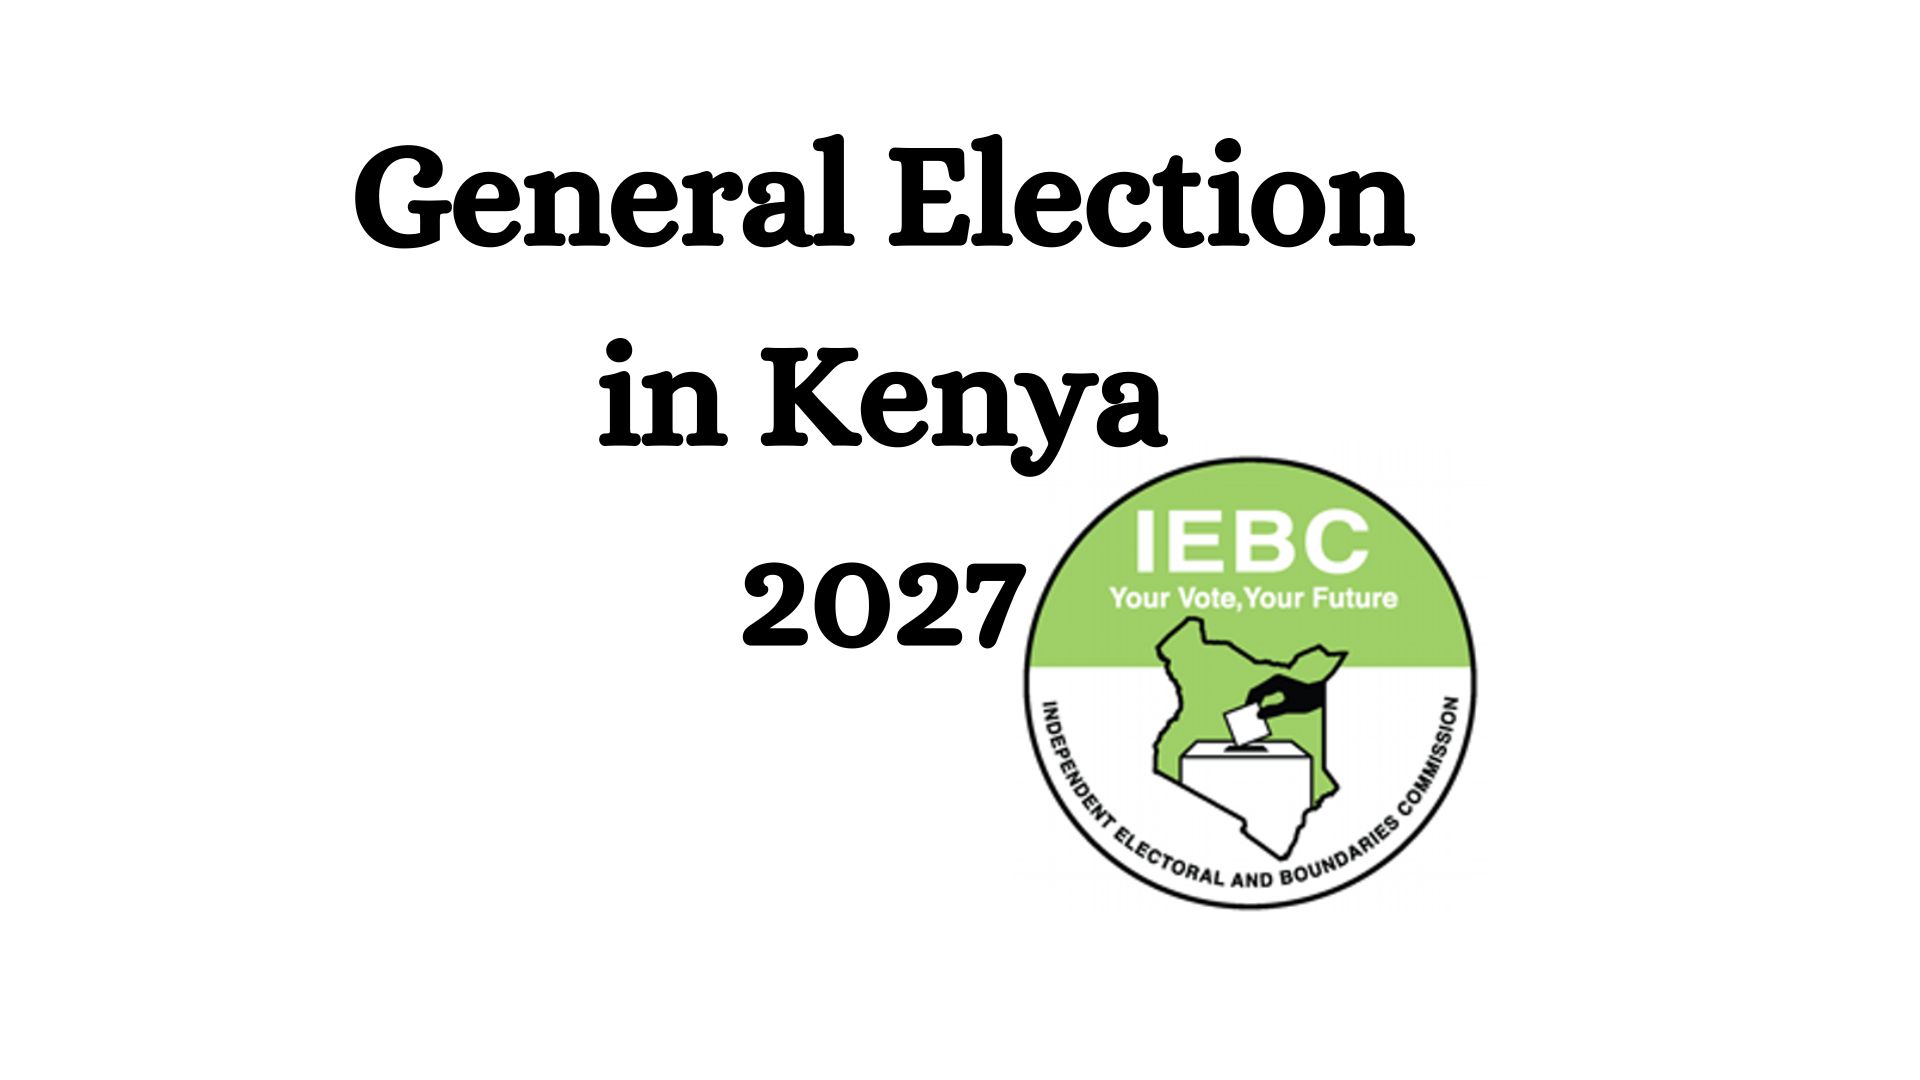 General election in Kenya 2027